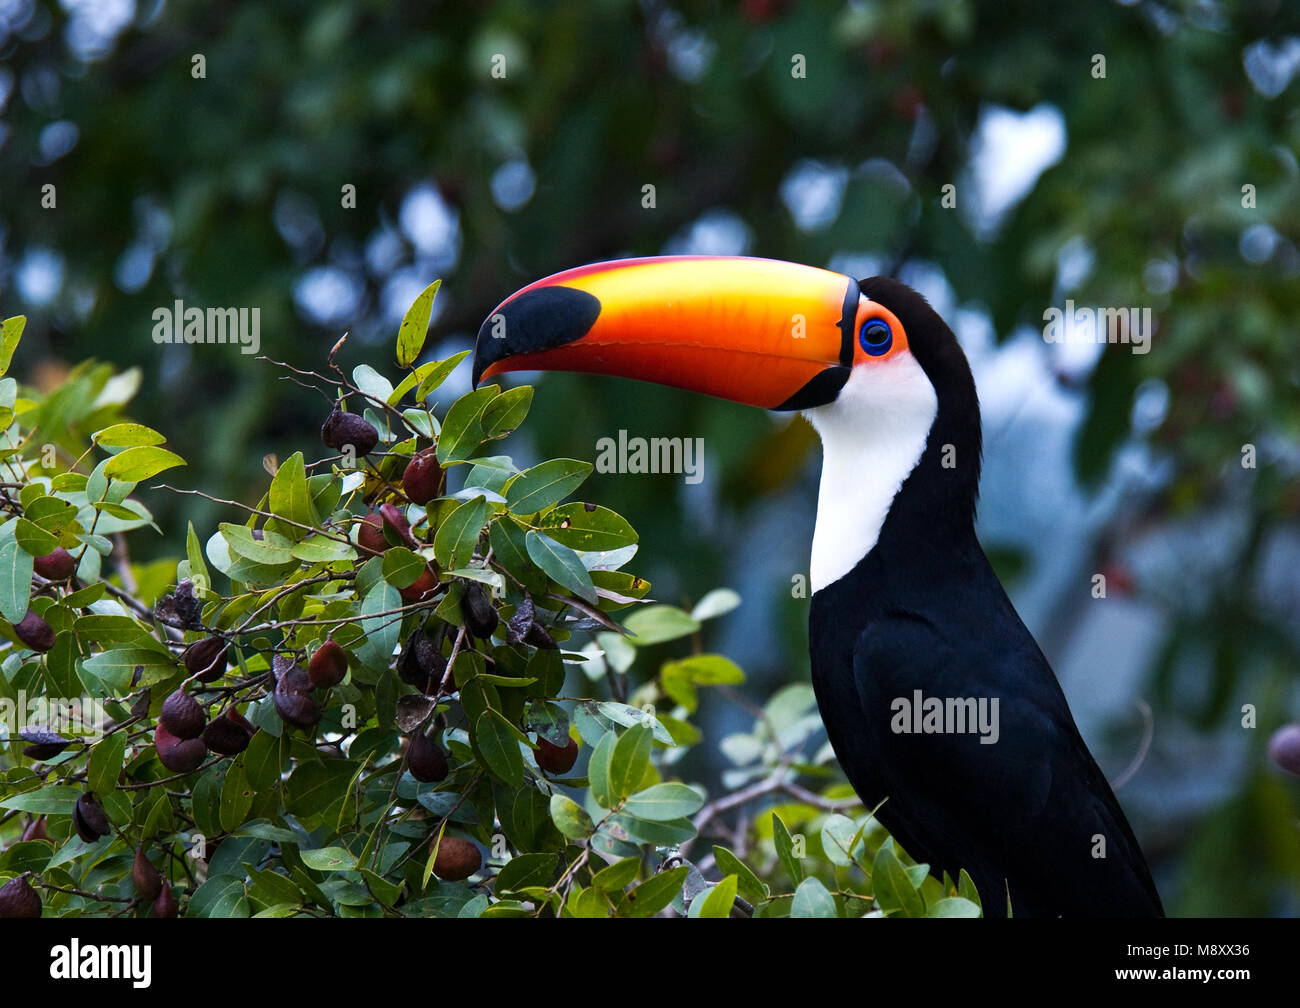 Toco Toucan in bush; Reuzentoekan op struik Stock Photo